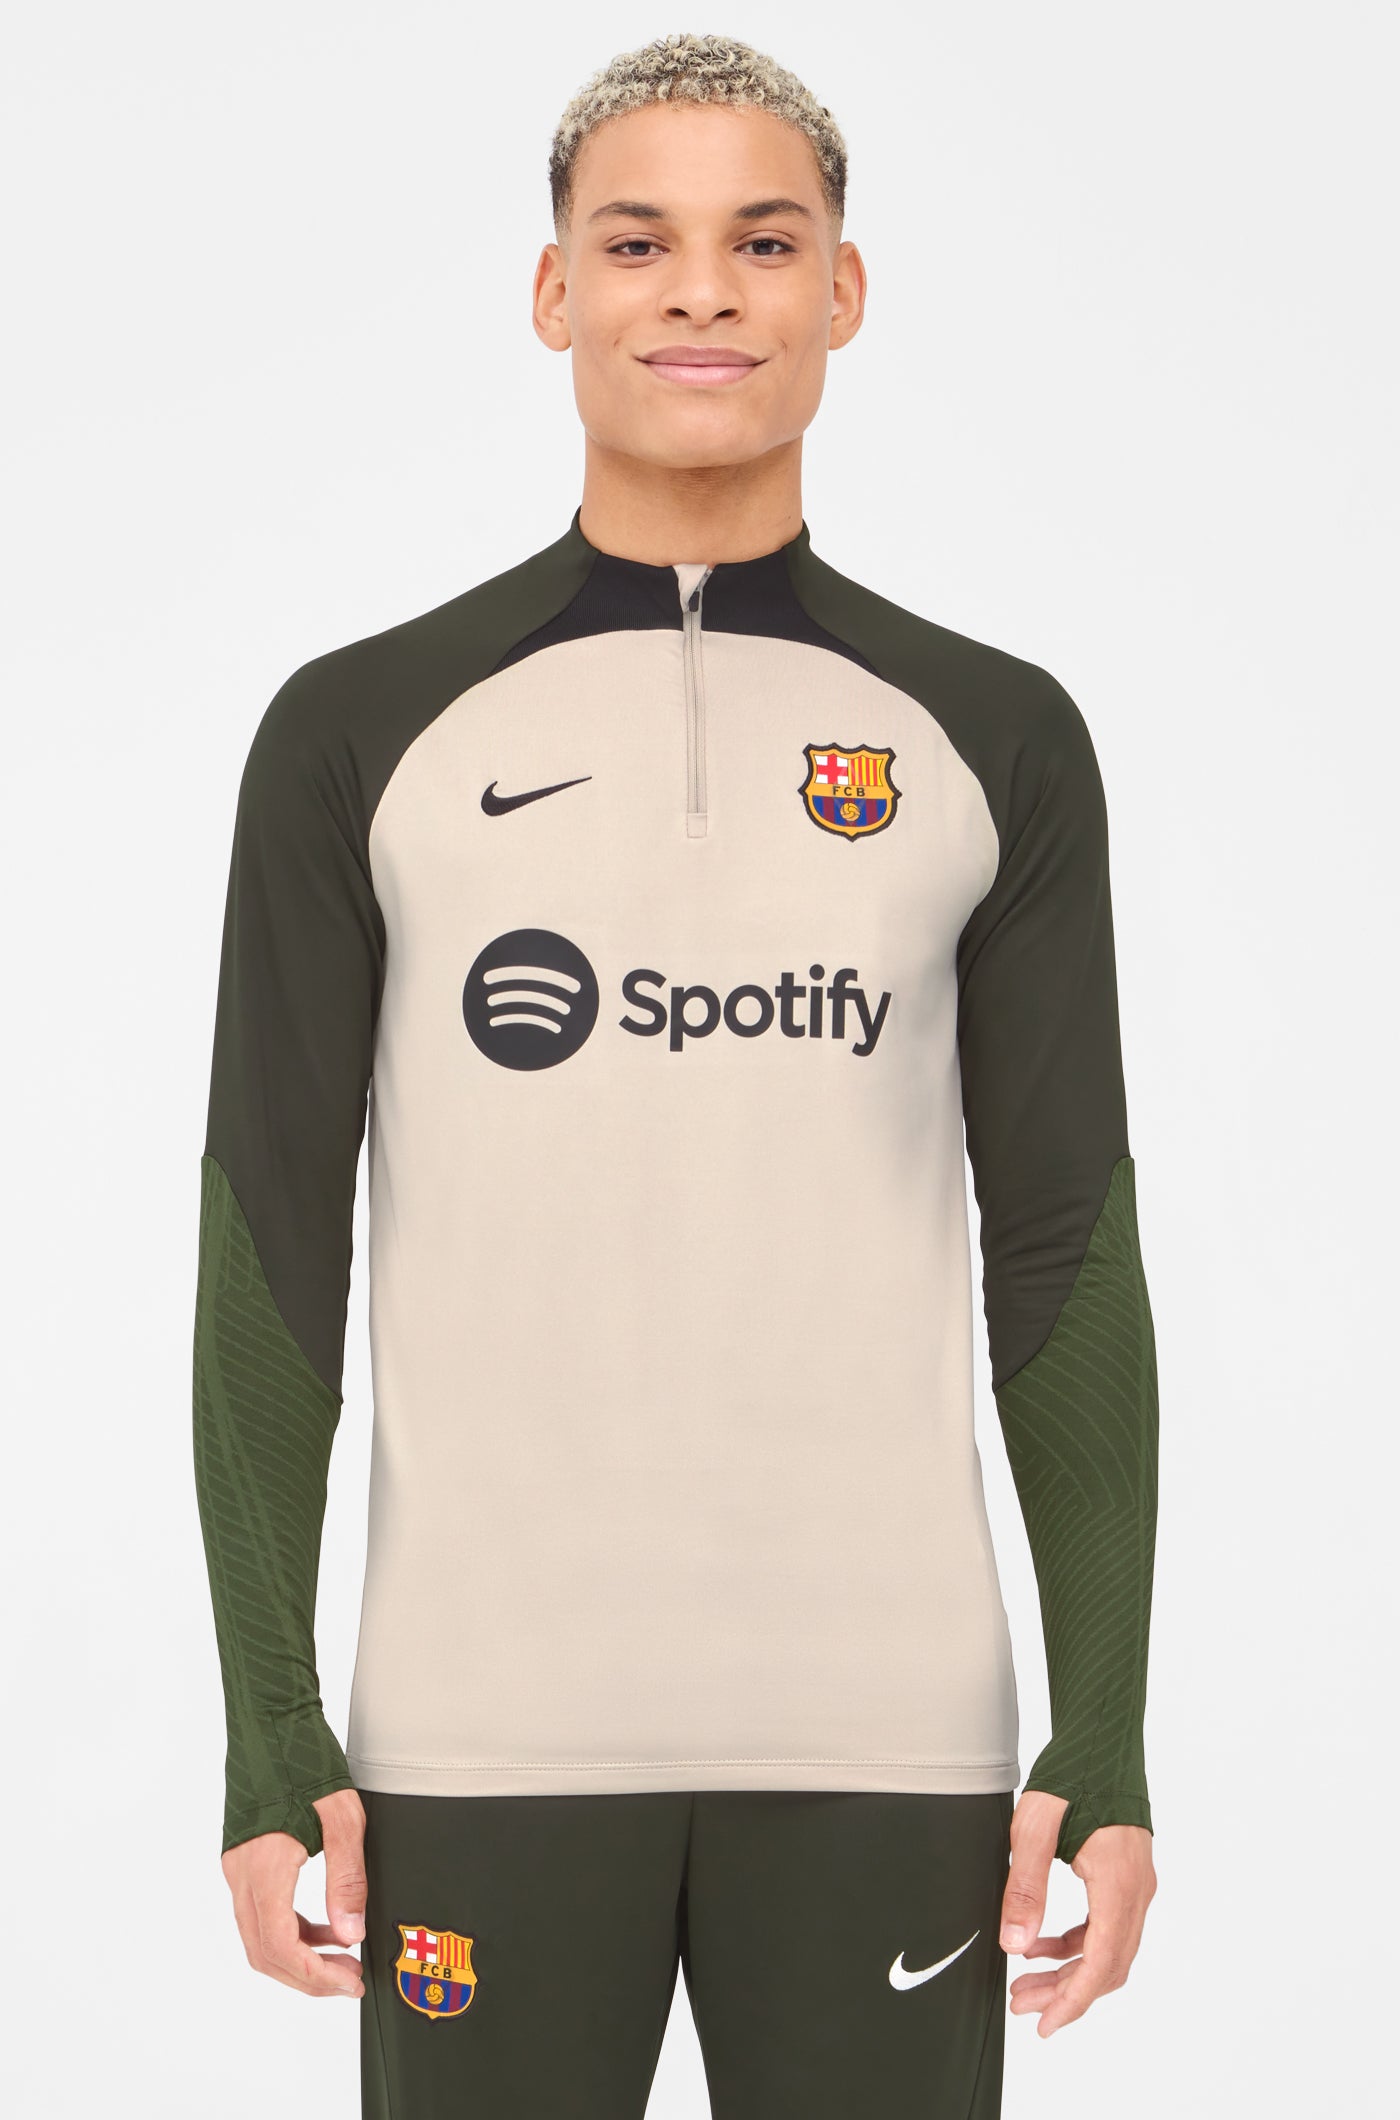 de entrenamiento – Barça Official Store Spotify Camp Nou